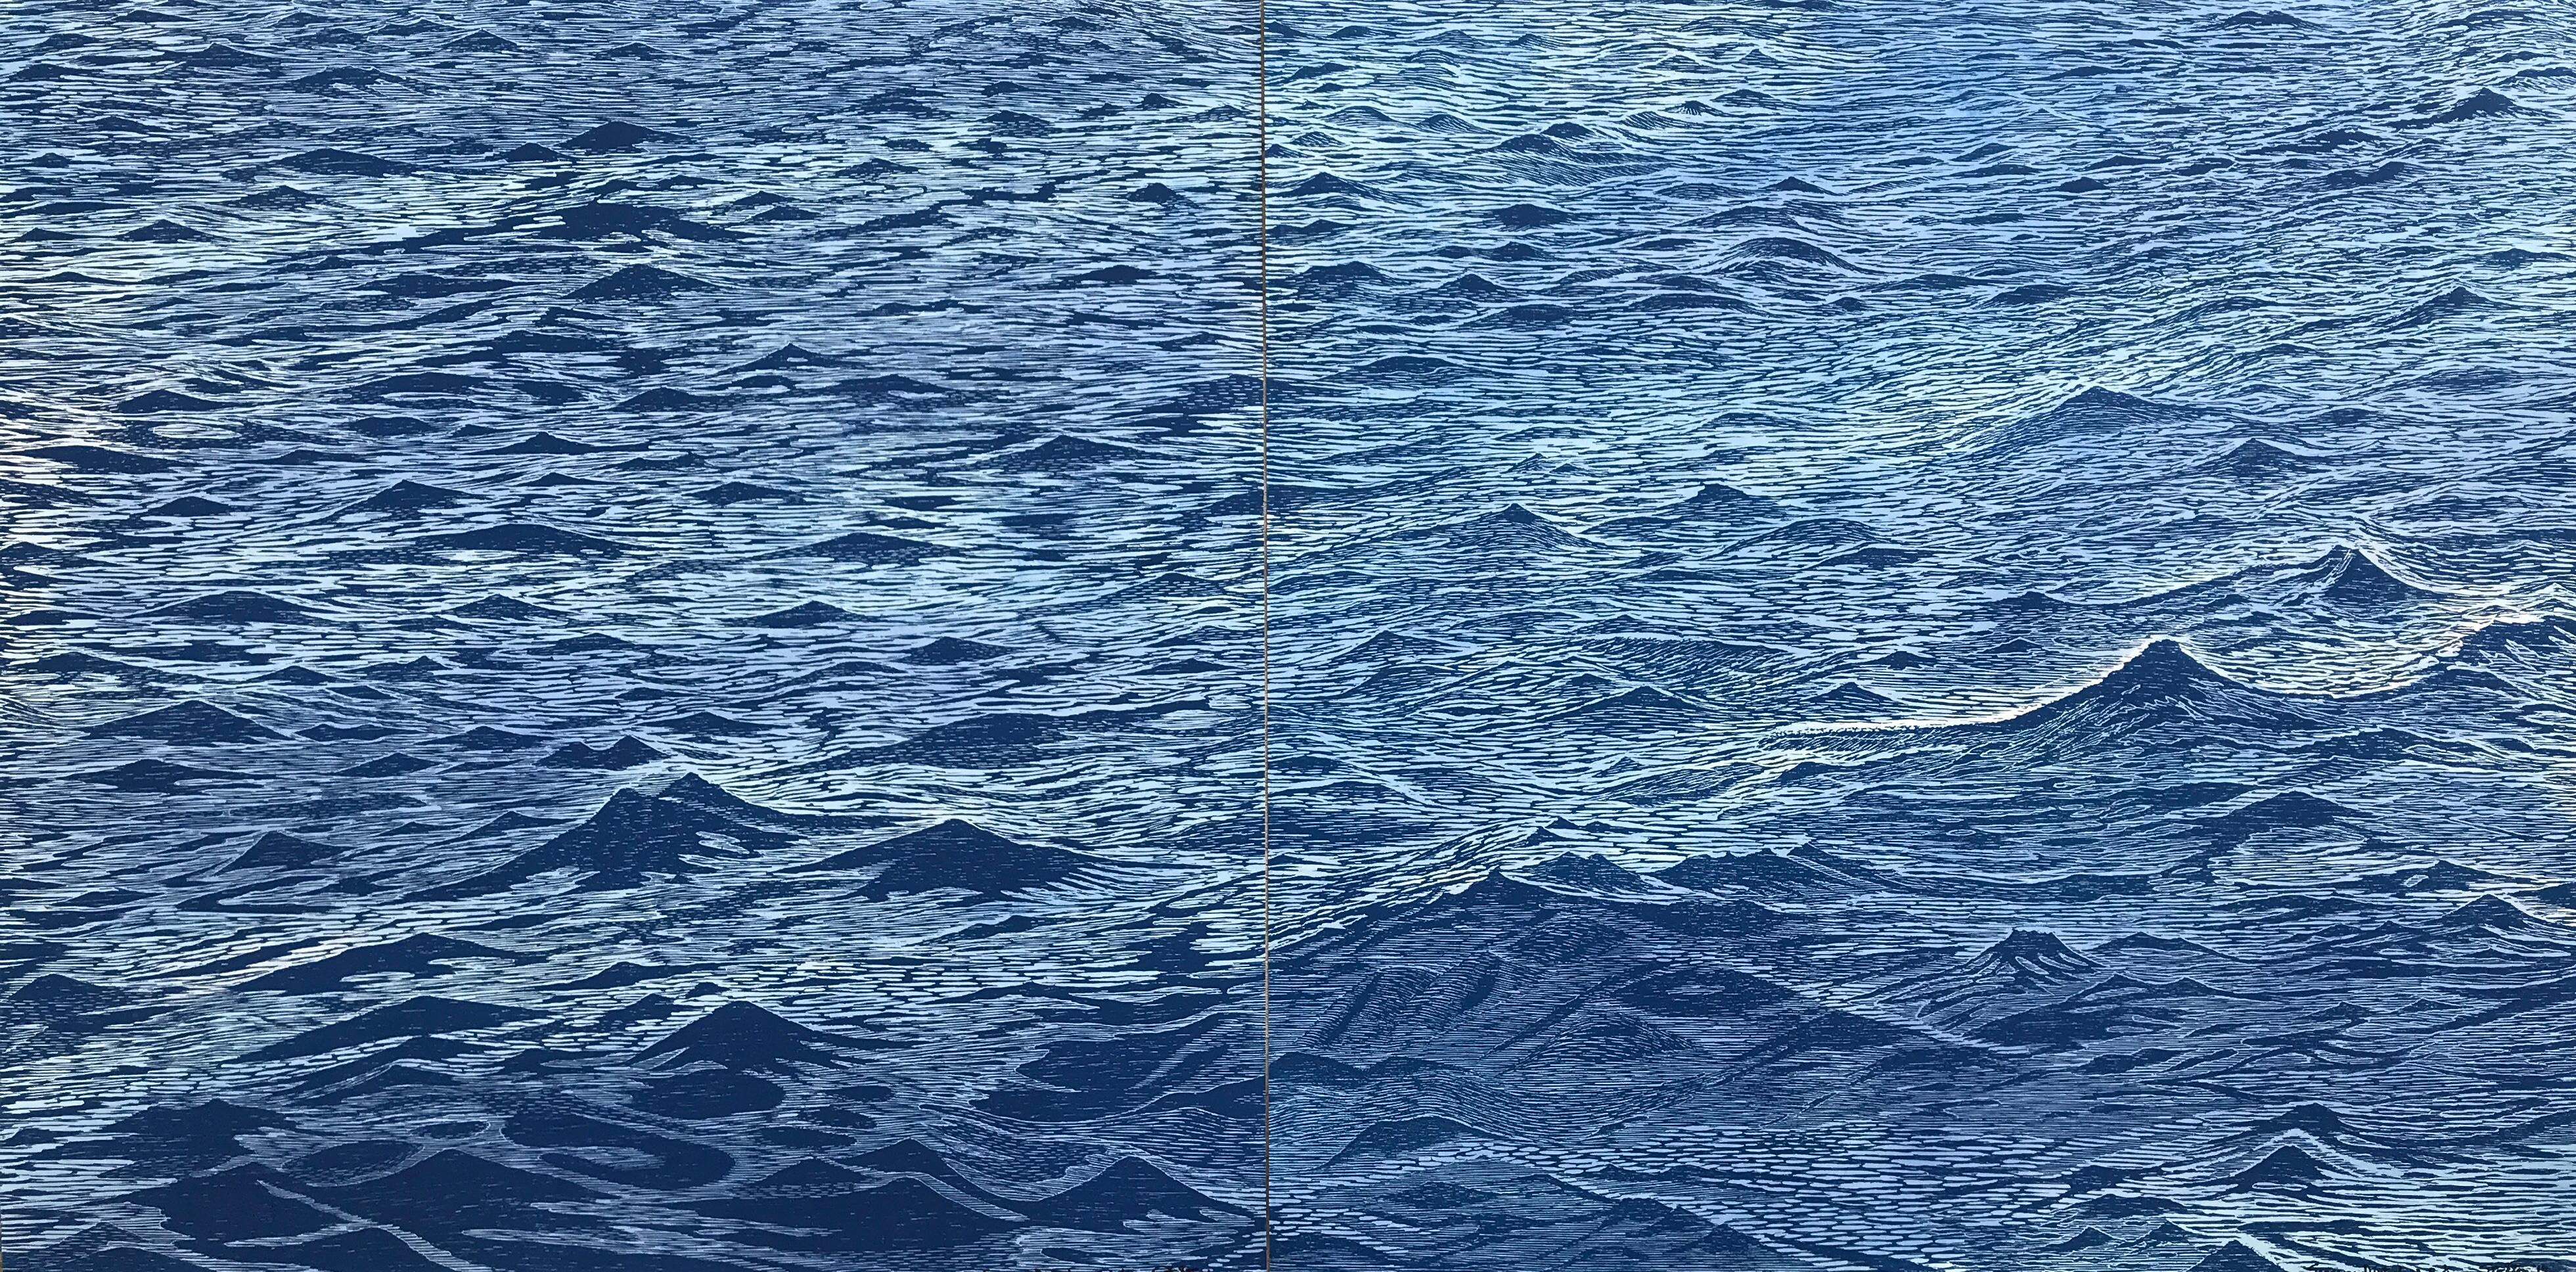 Eve Stockton Landscape Print - Seascape Diptych 23, Large Blue Horizontal Woodcut Print of Water, Ocean Waves